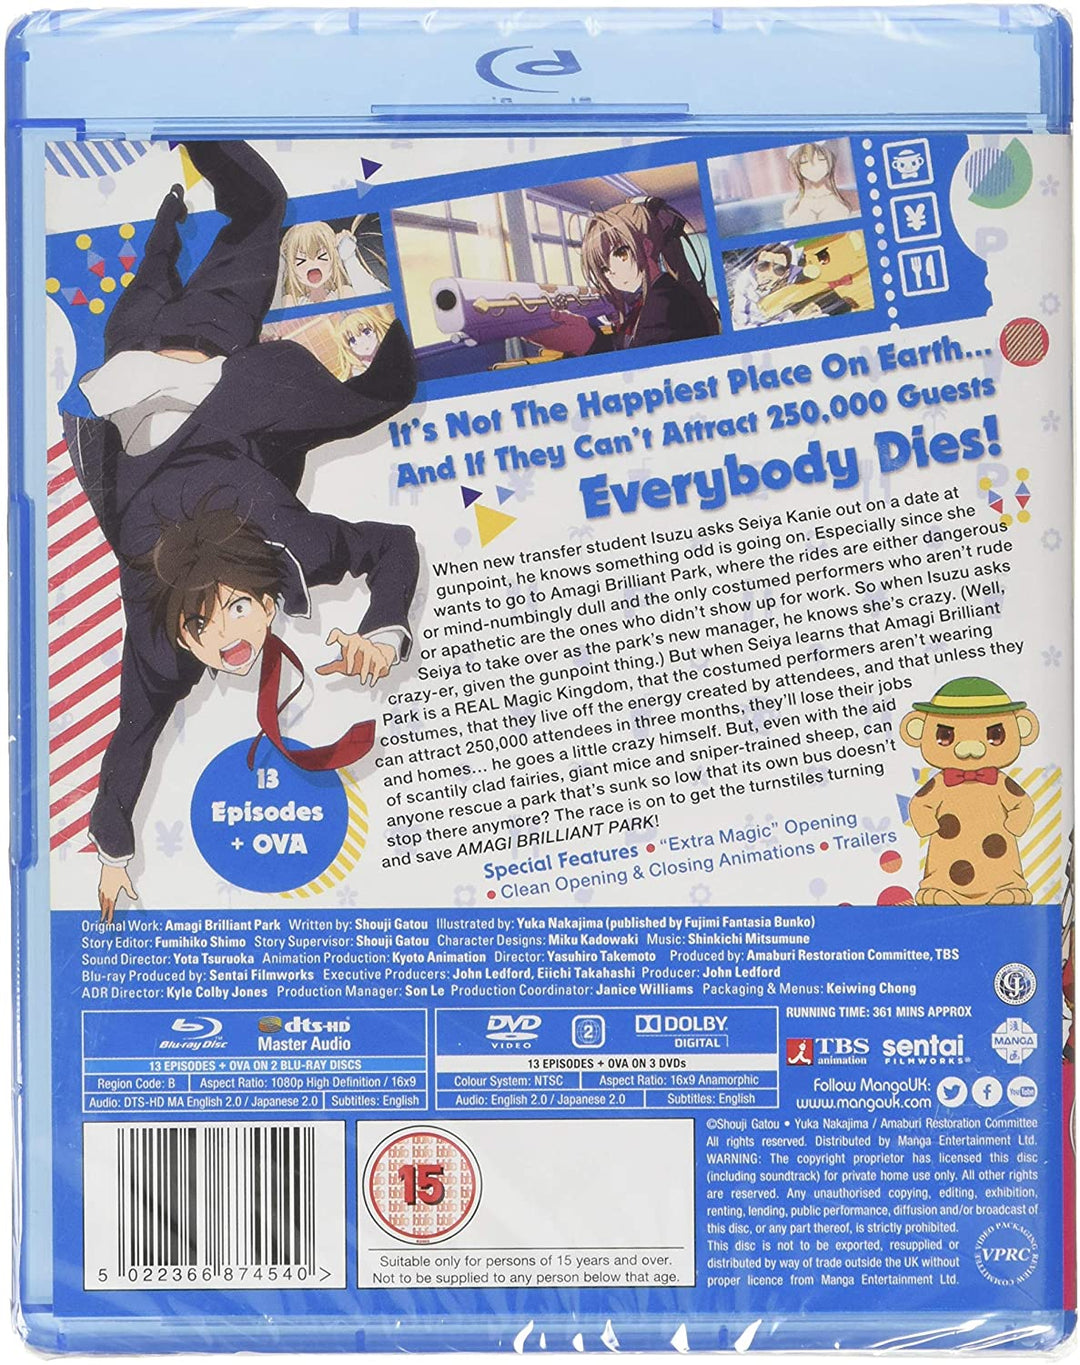 Amagi Brilliant Park Complete Season 1 Collection - [Blu-Ray]